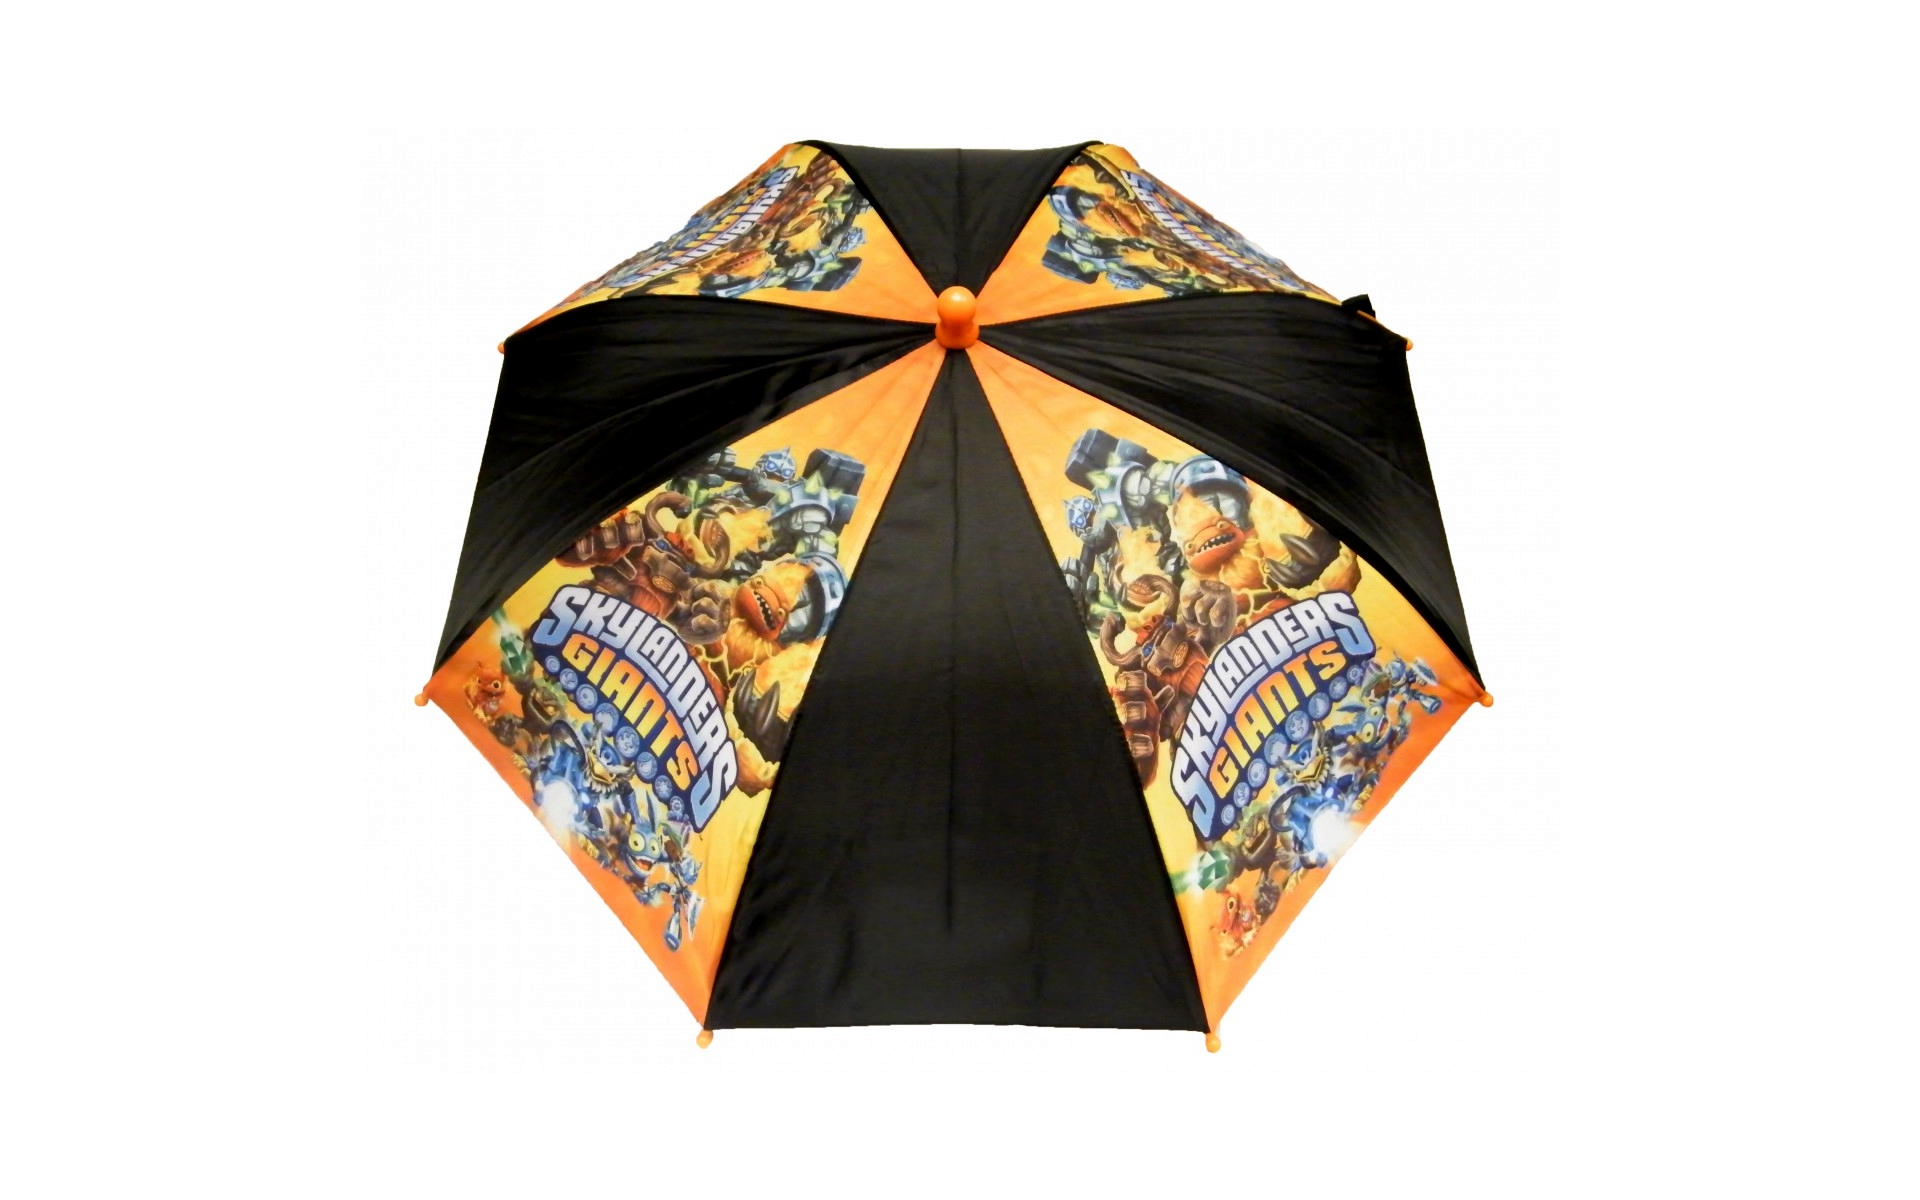 Skylanders 'Giants' School Rain Brolly Umbrella